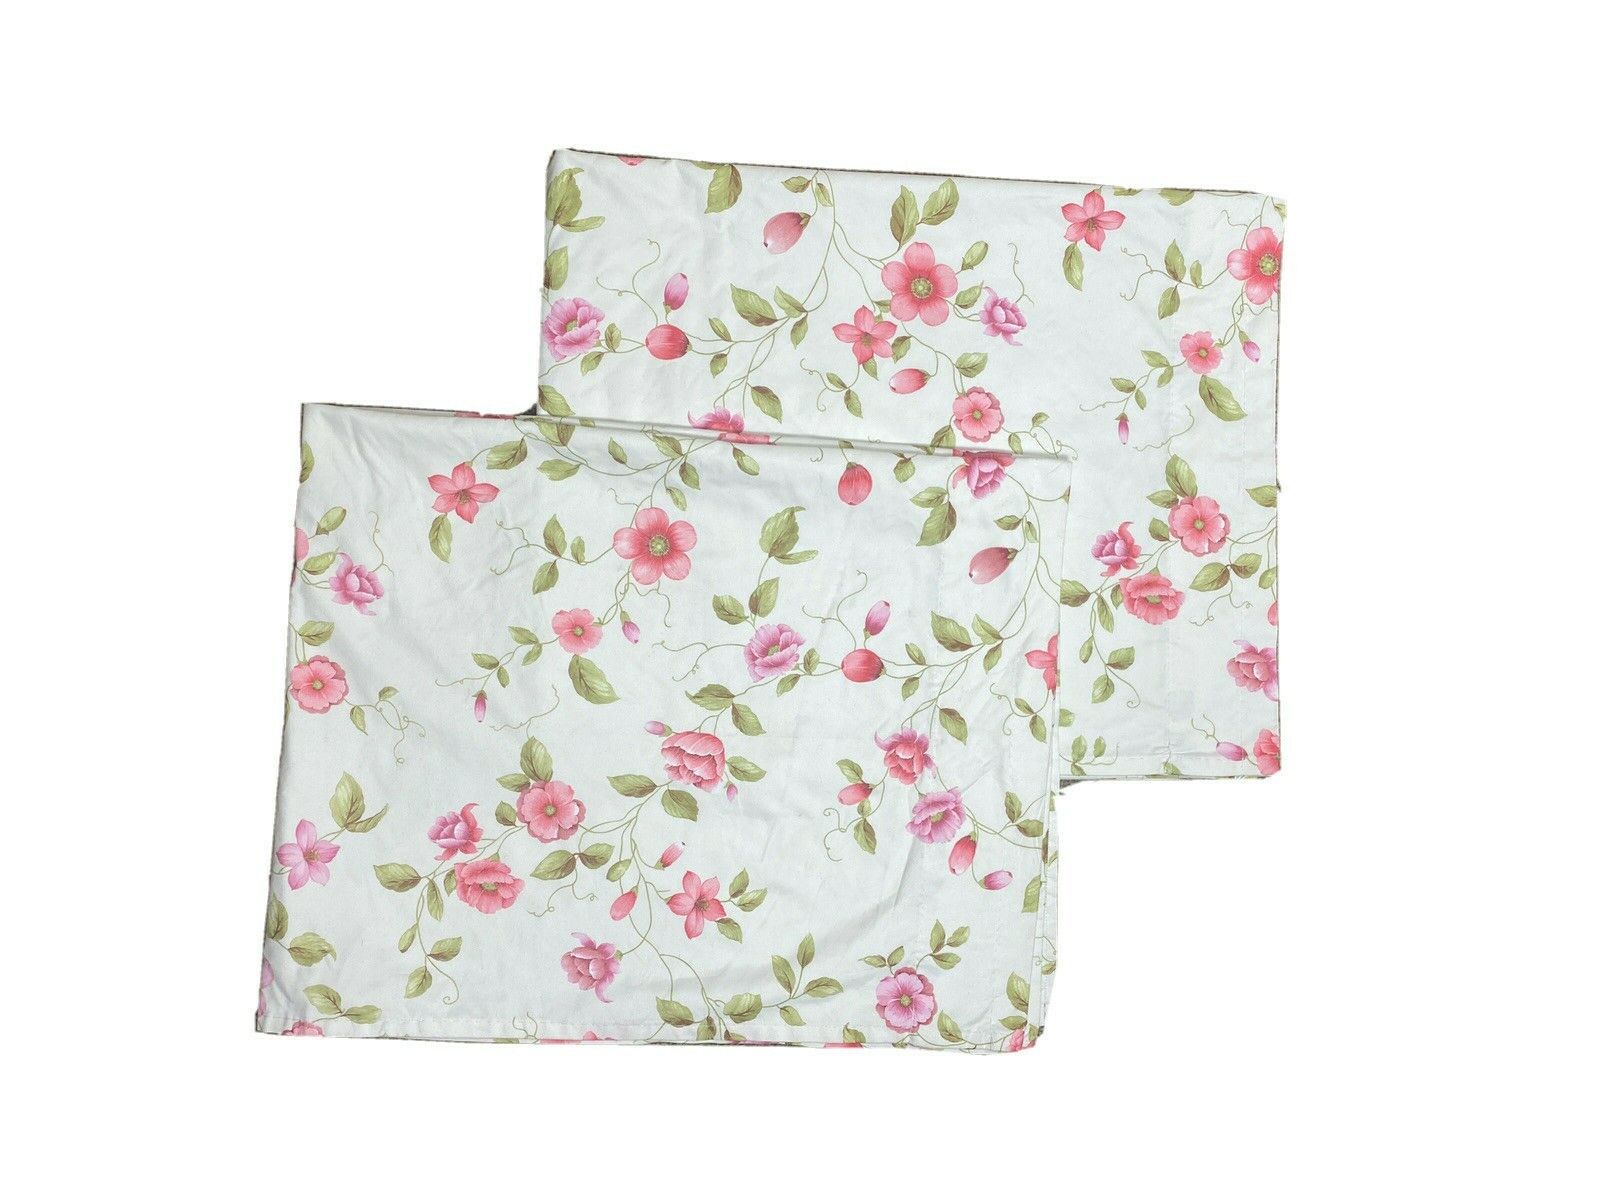 2 Vintage White Pink Floral Curtains Panels Kitchen Cafe Drapes Print Pattern 